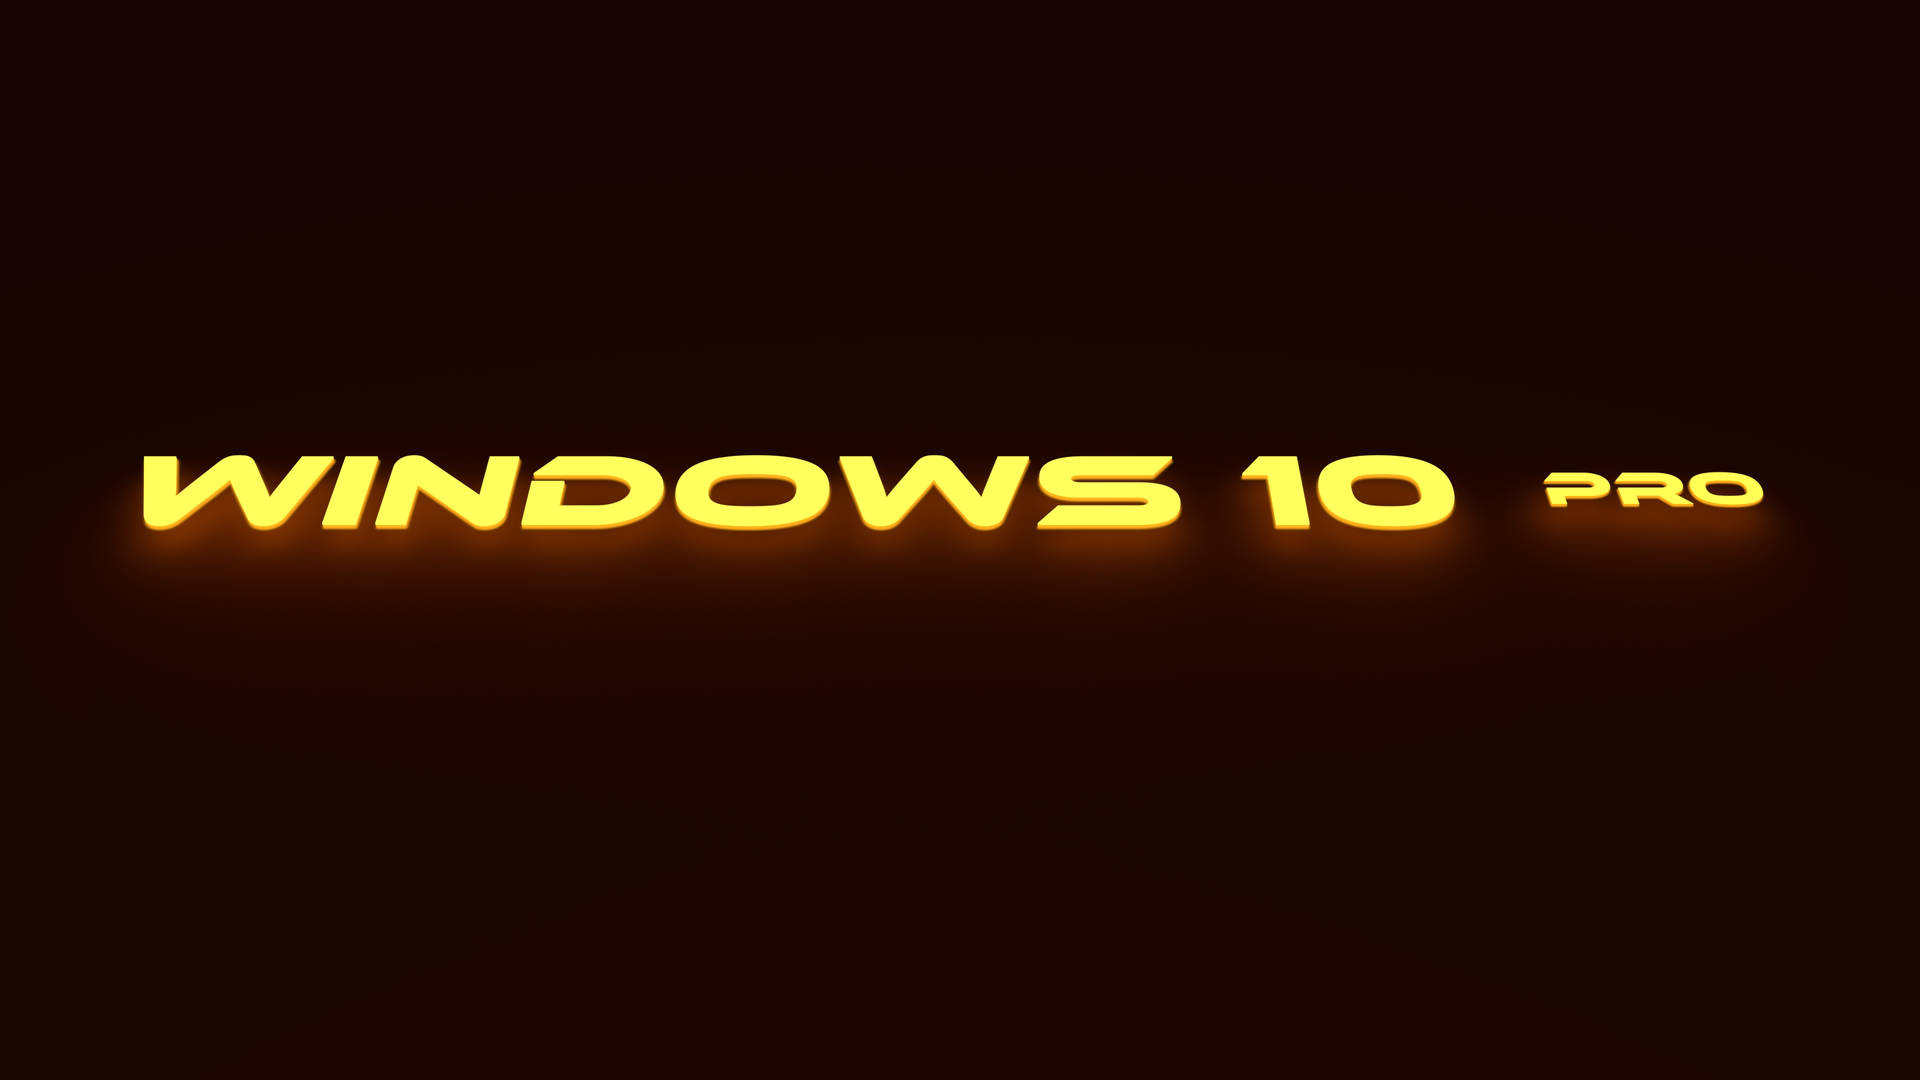 Windows 10 Hd Pro Background